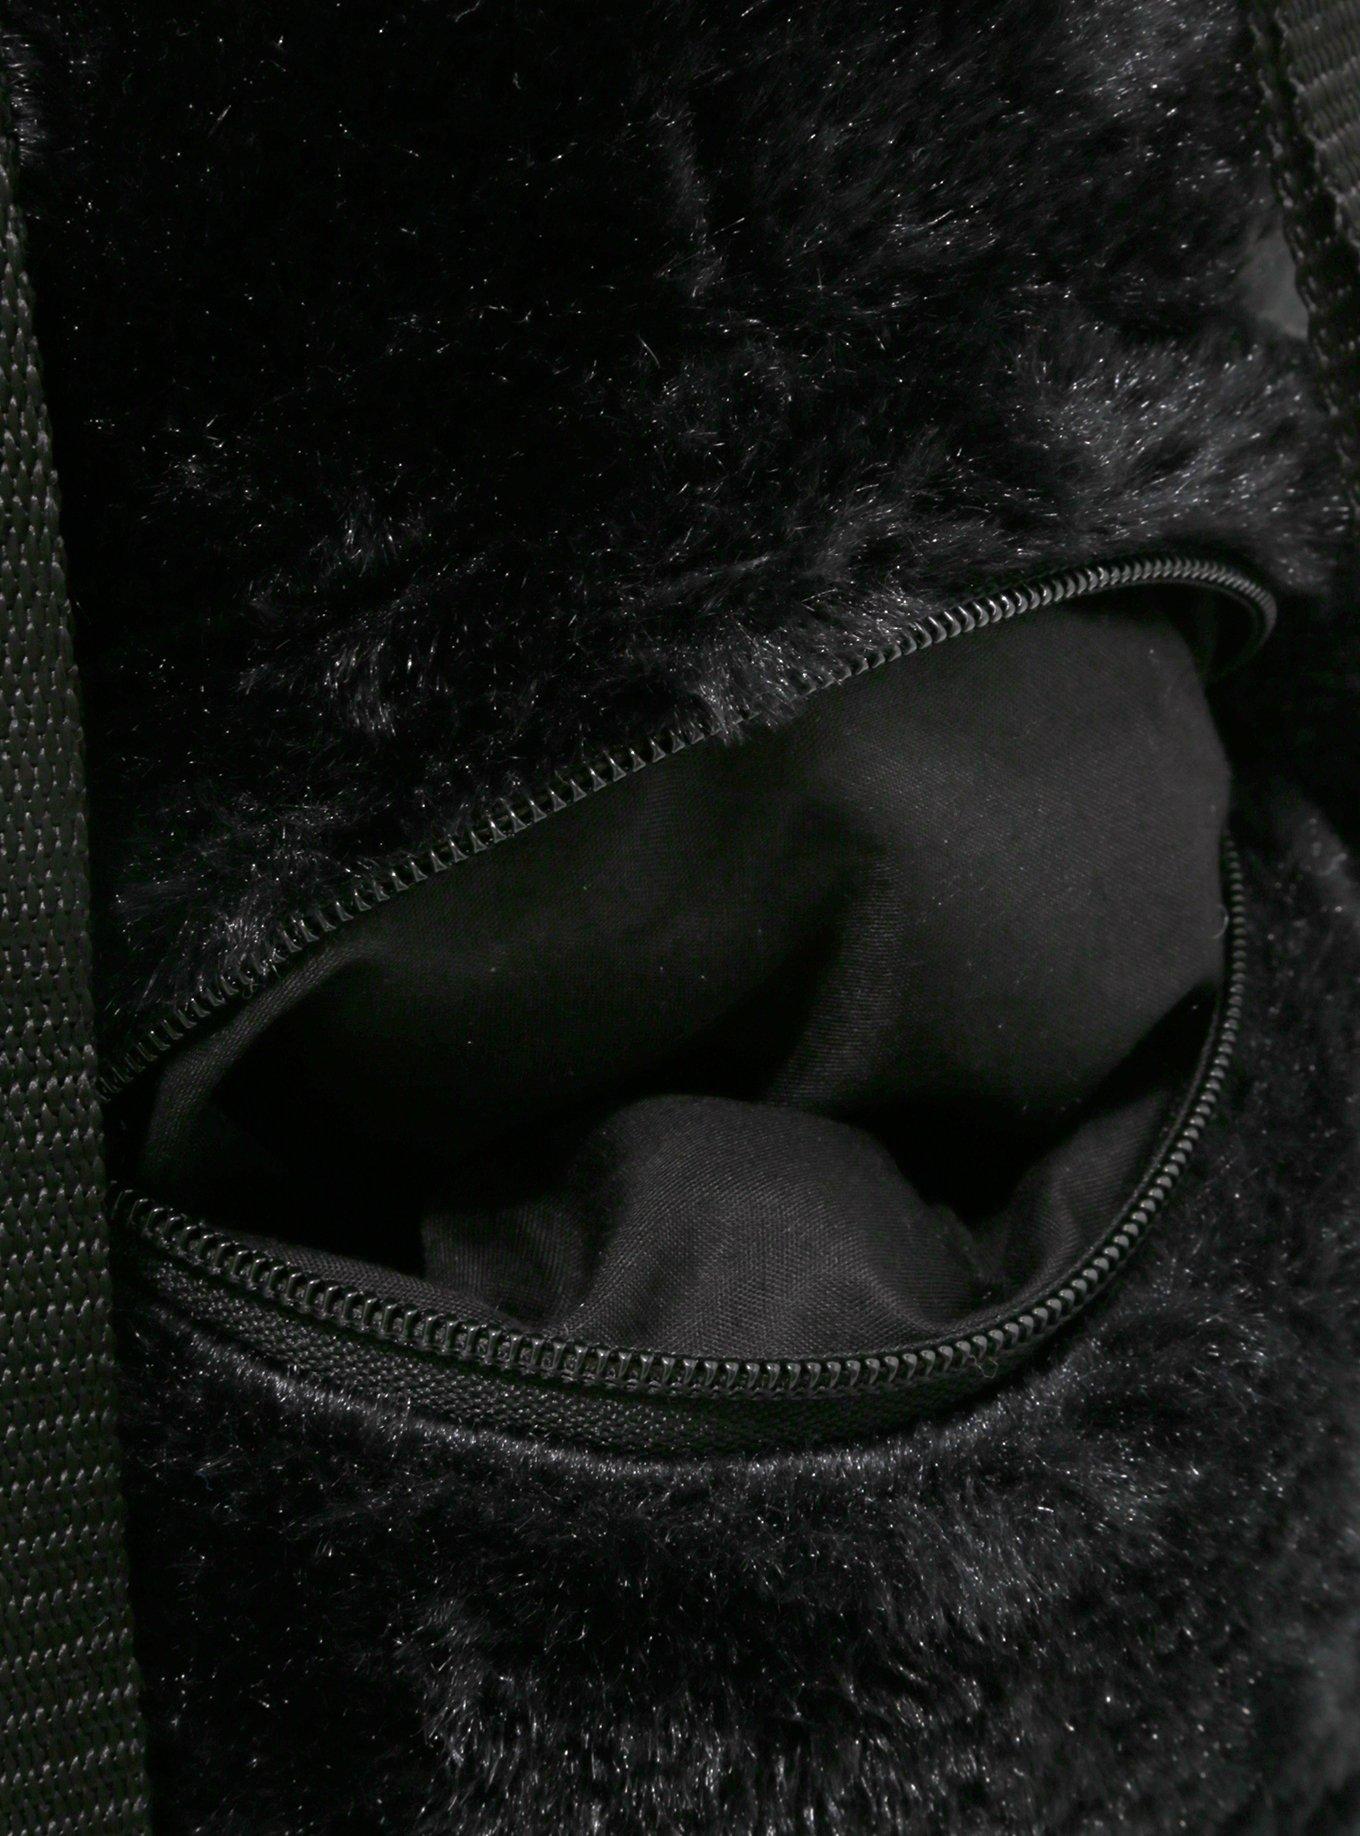 Black Bunny Piercings & Chains Plush Mini Backpack, , alternate